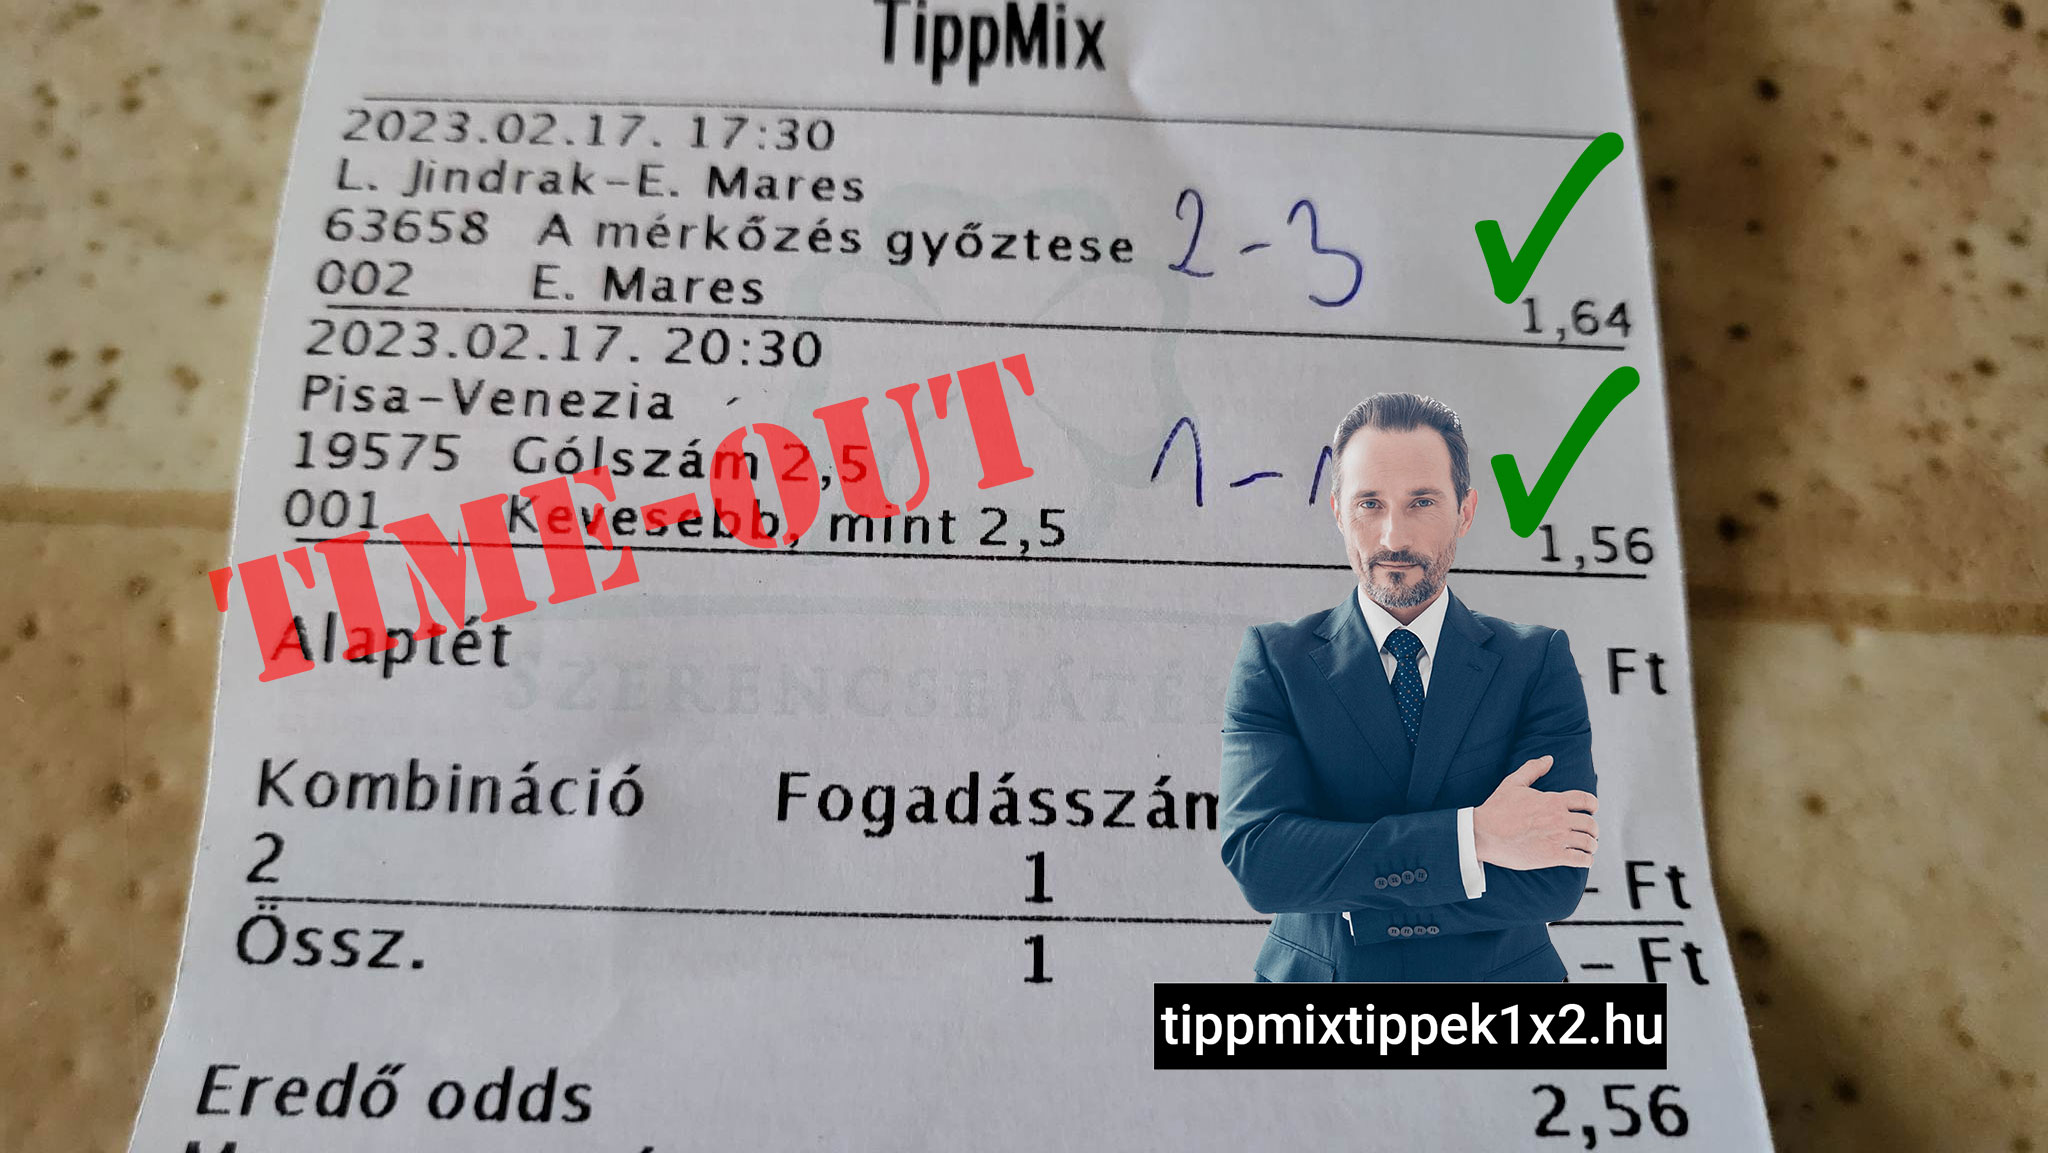 Free Tippmix tip ticked again - Tippmix Tips 1x2 - Tippmix tips